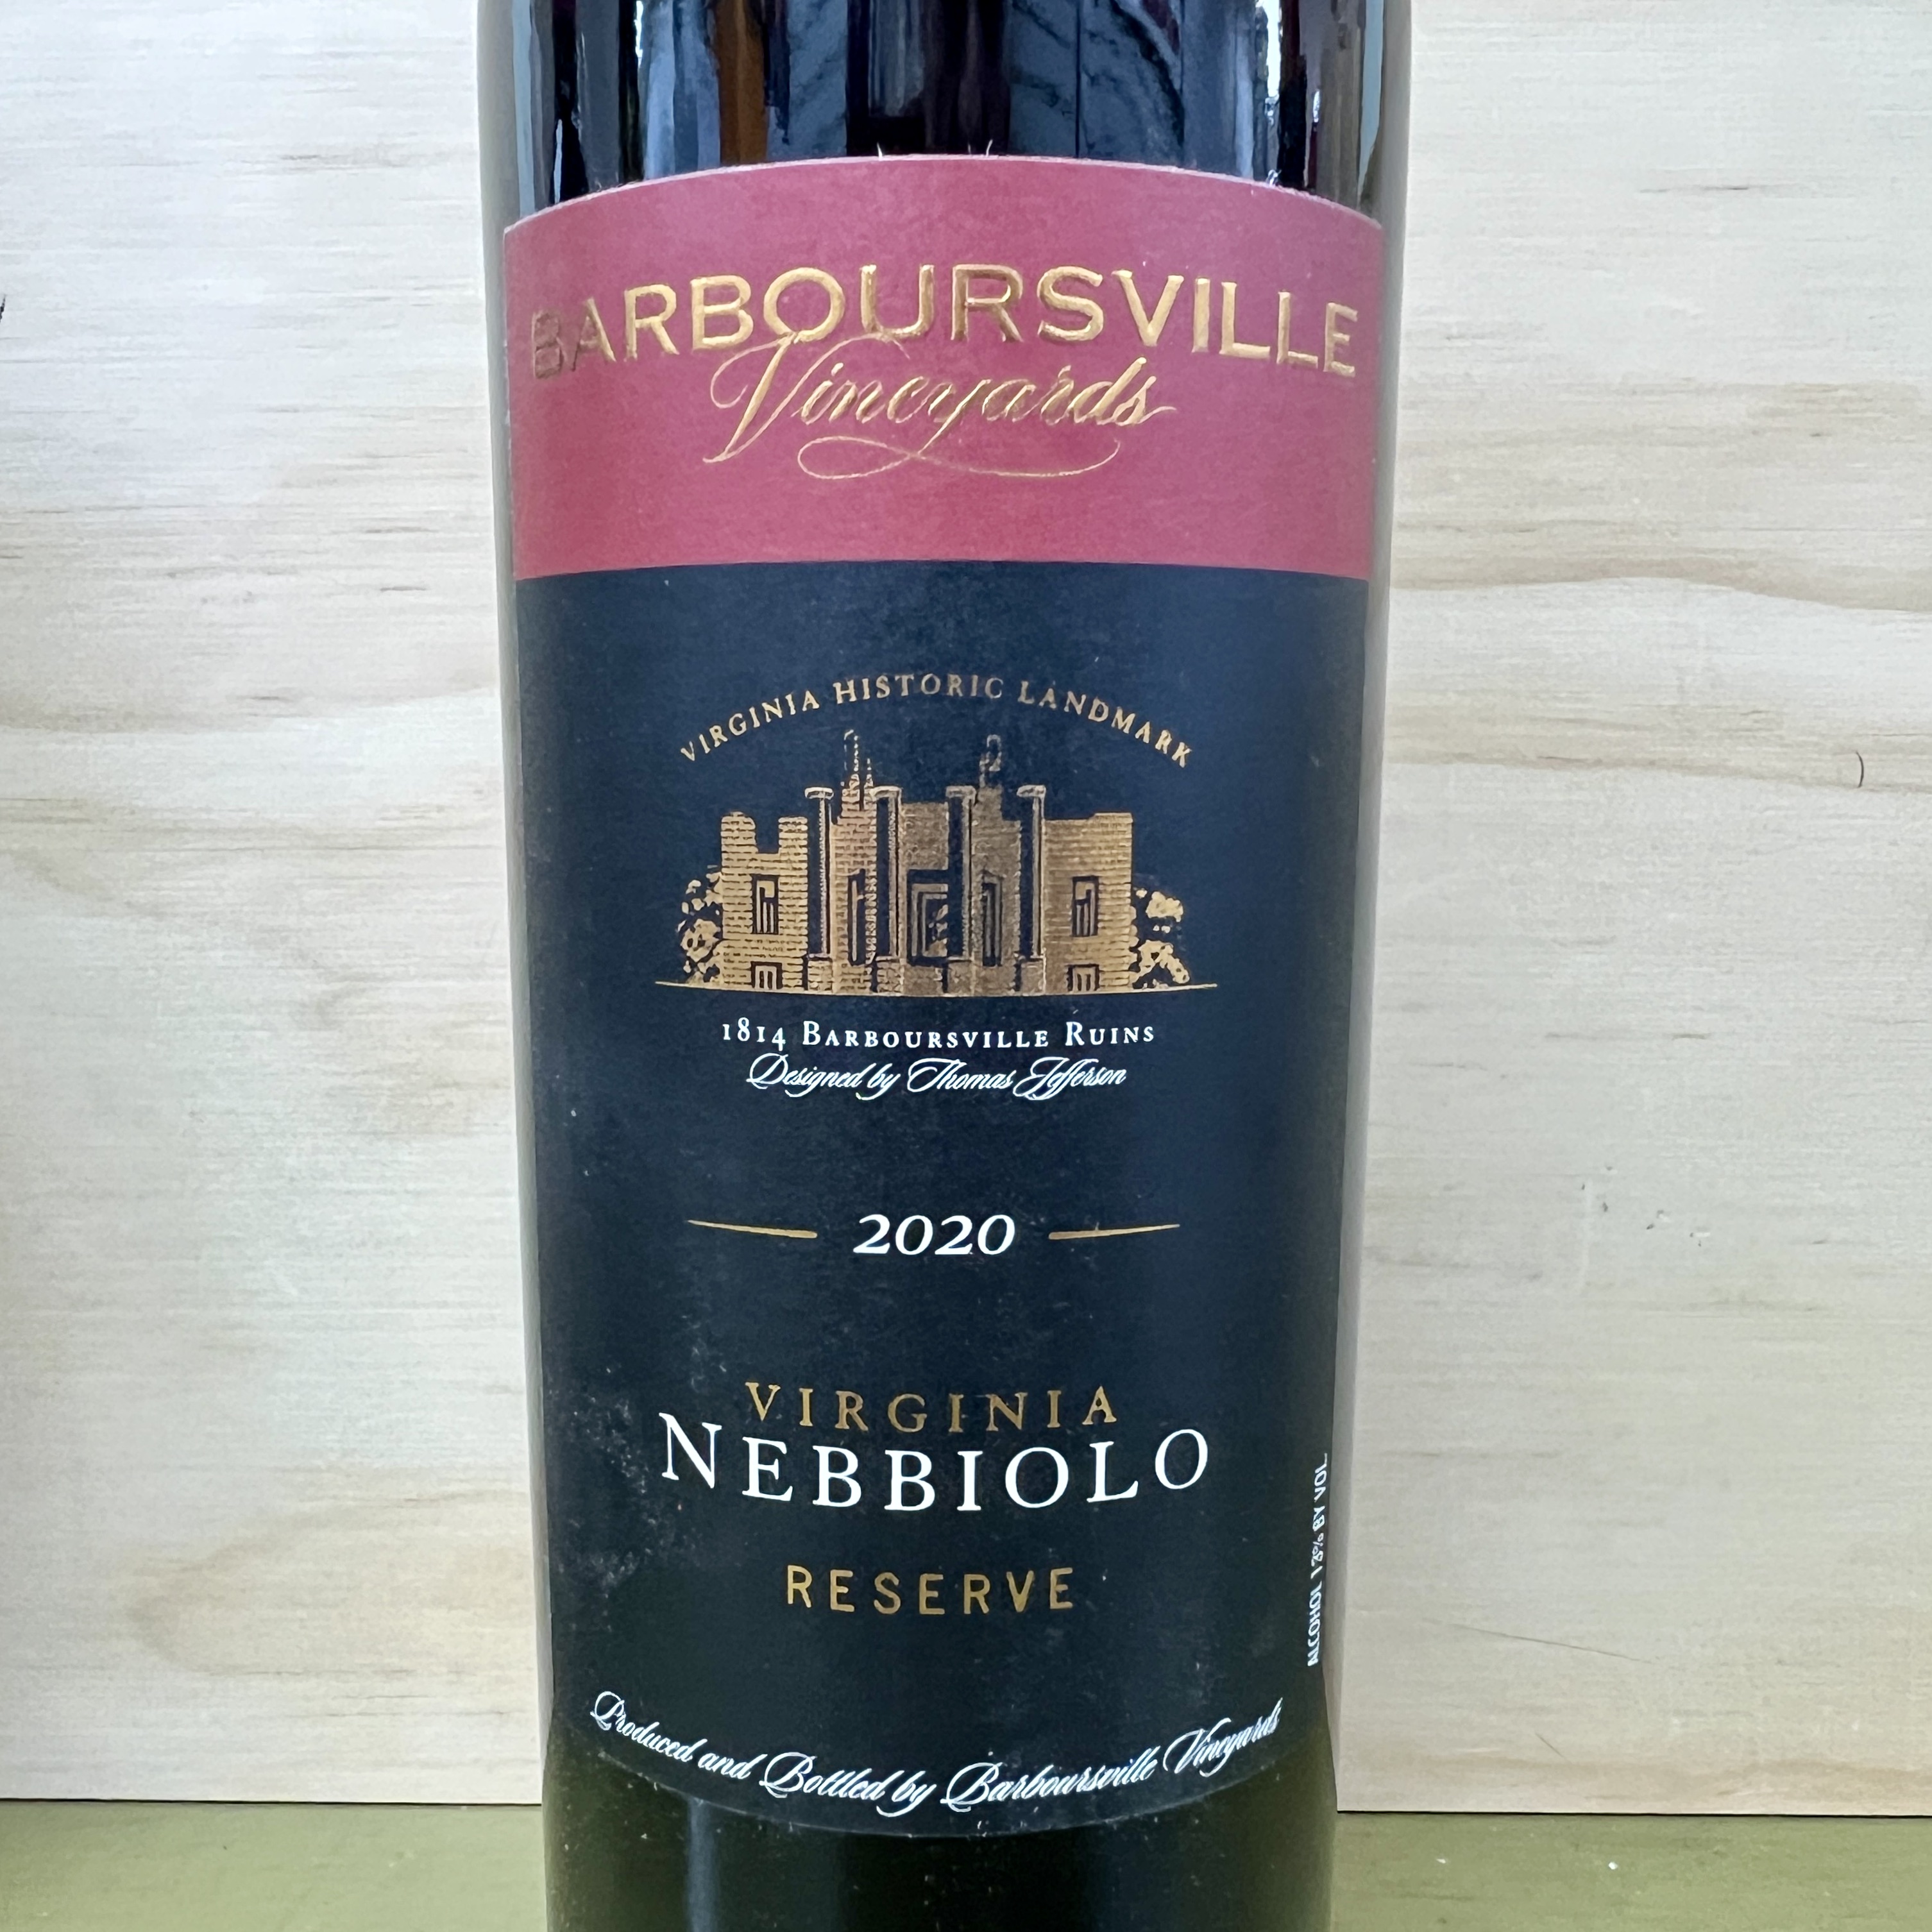 Barboursville Vineyards Nebbiolo Reserve 2020